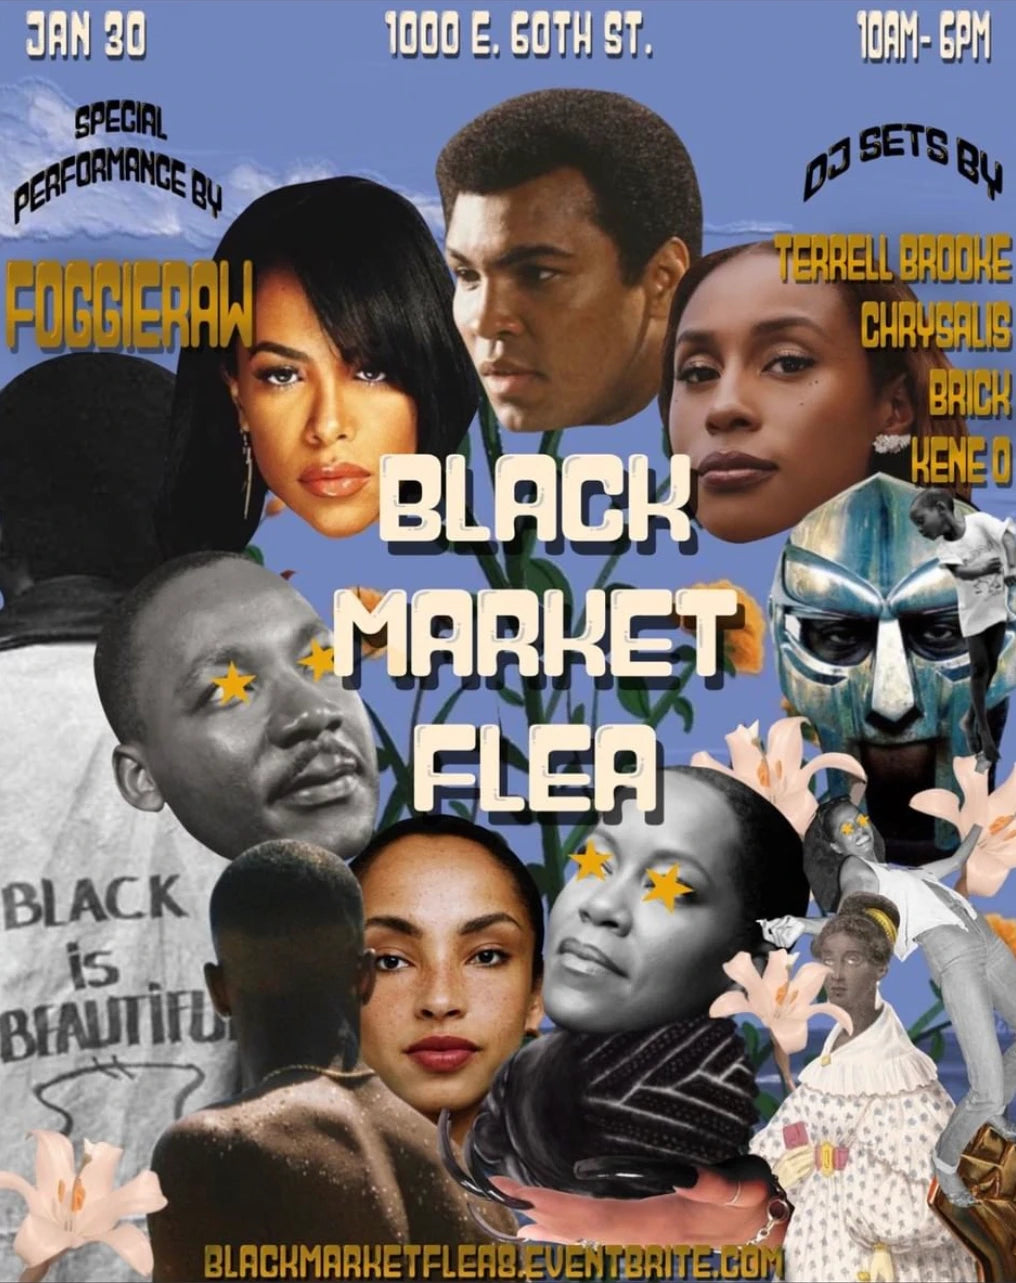 Pop-up at Black Market Flea | Sun, Jan 30